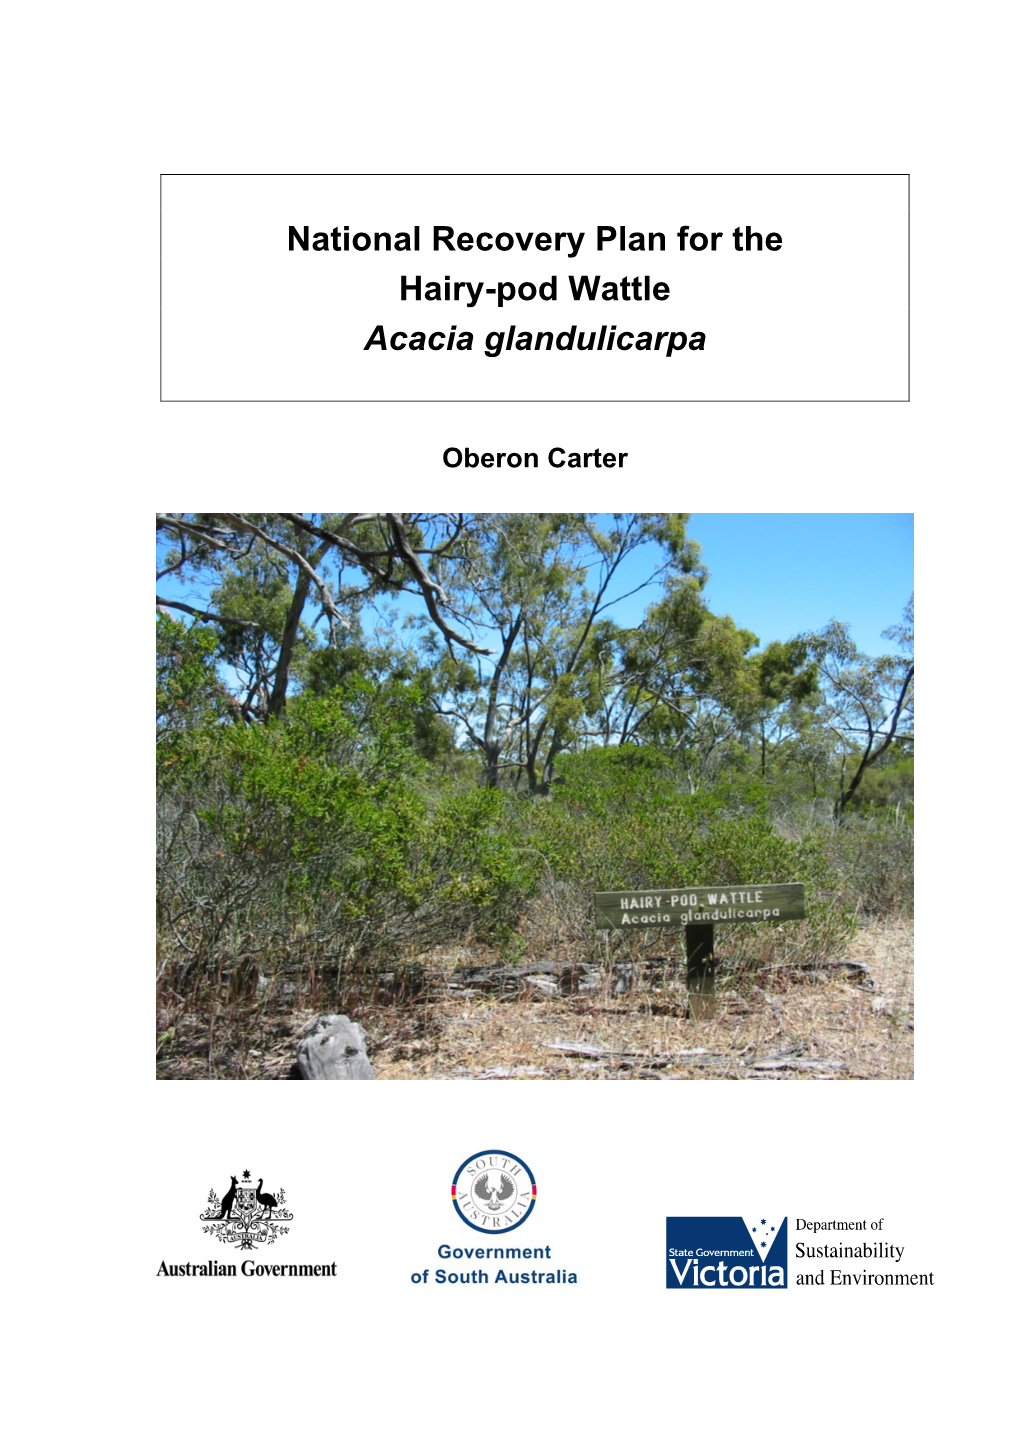 National Recovery Plan for the Hairy-Pod Wattle Acacia Glandulicarpa